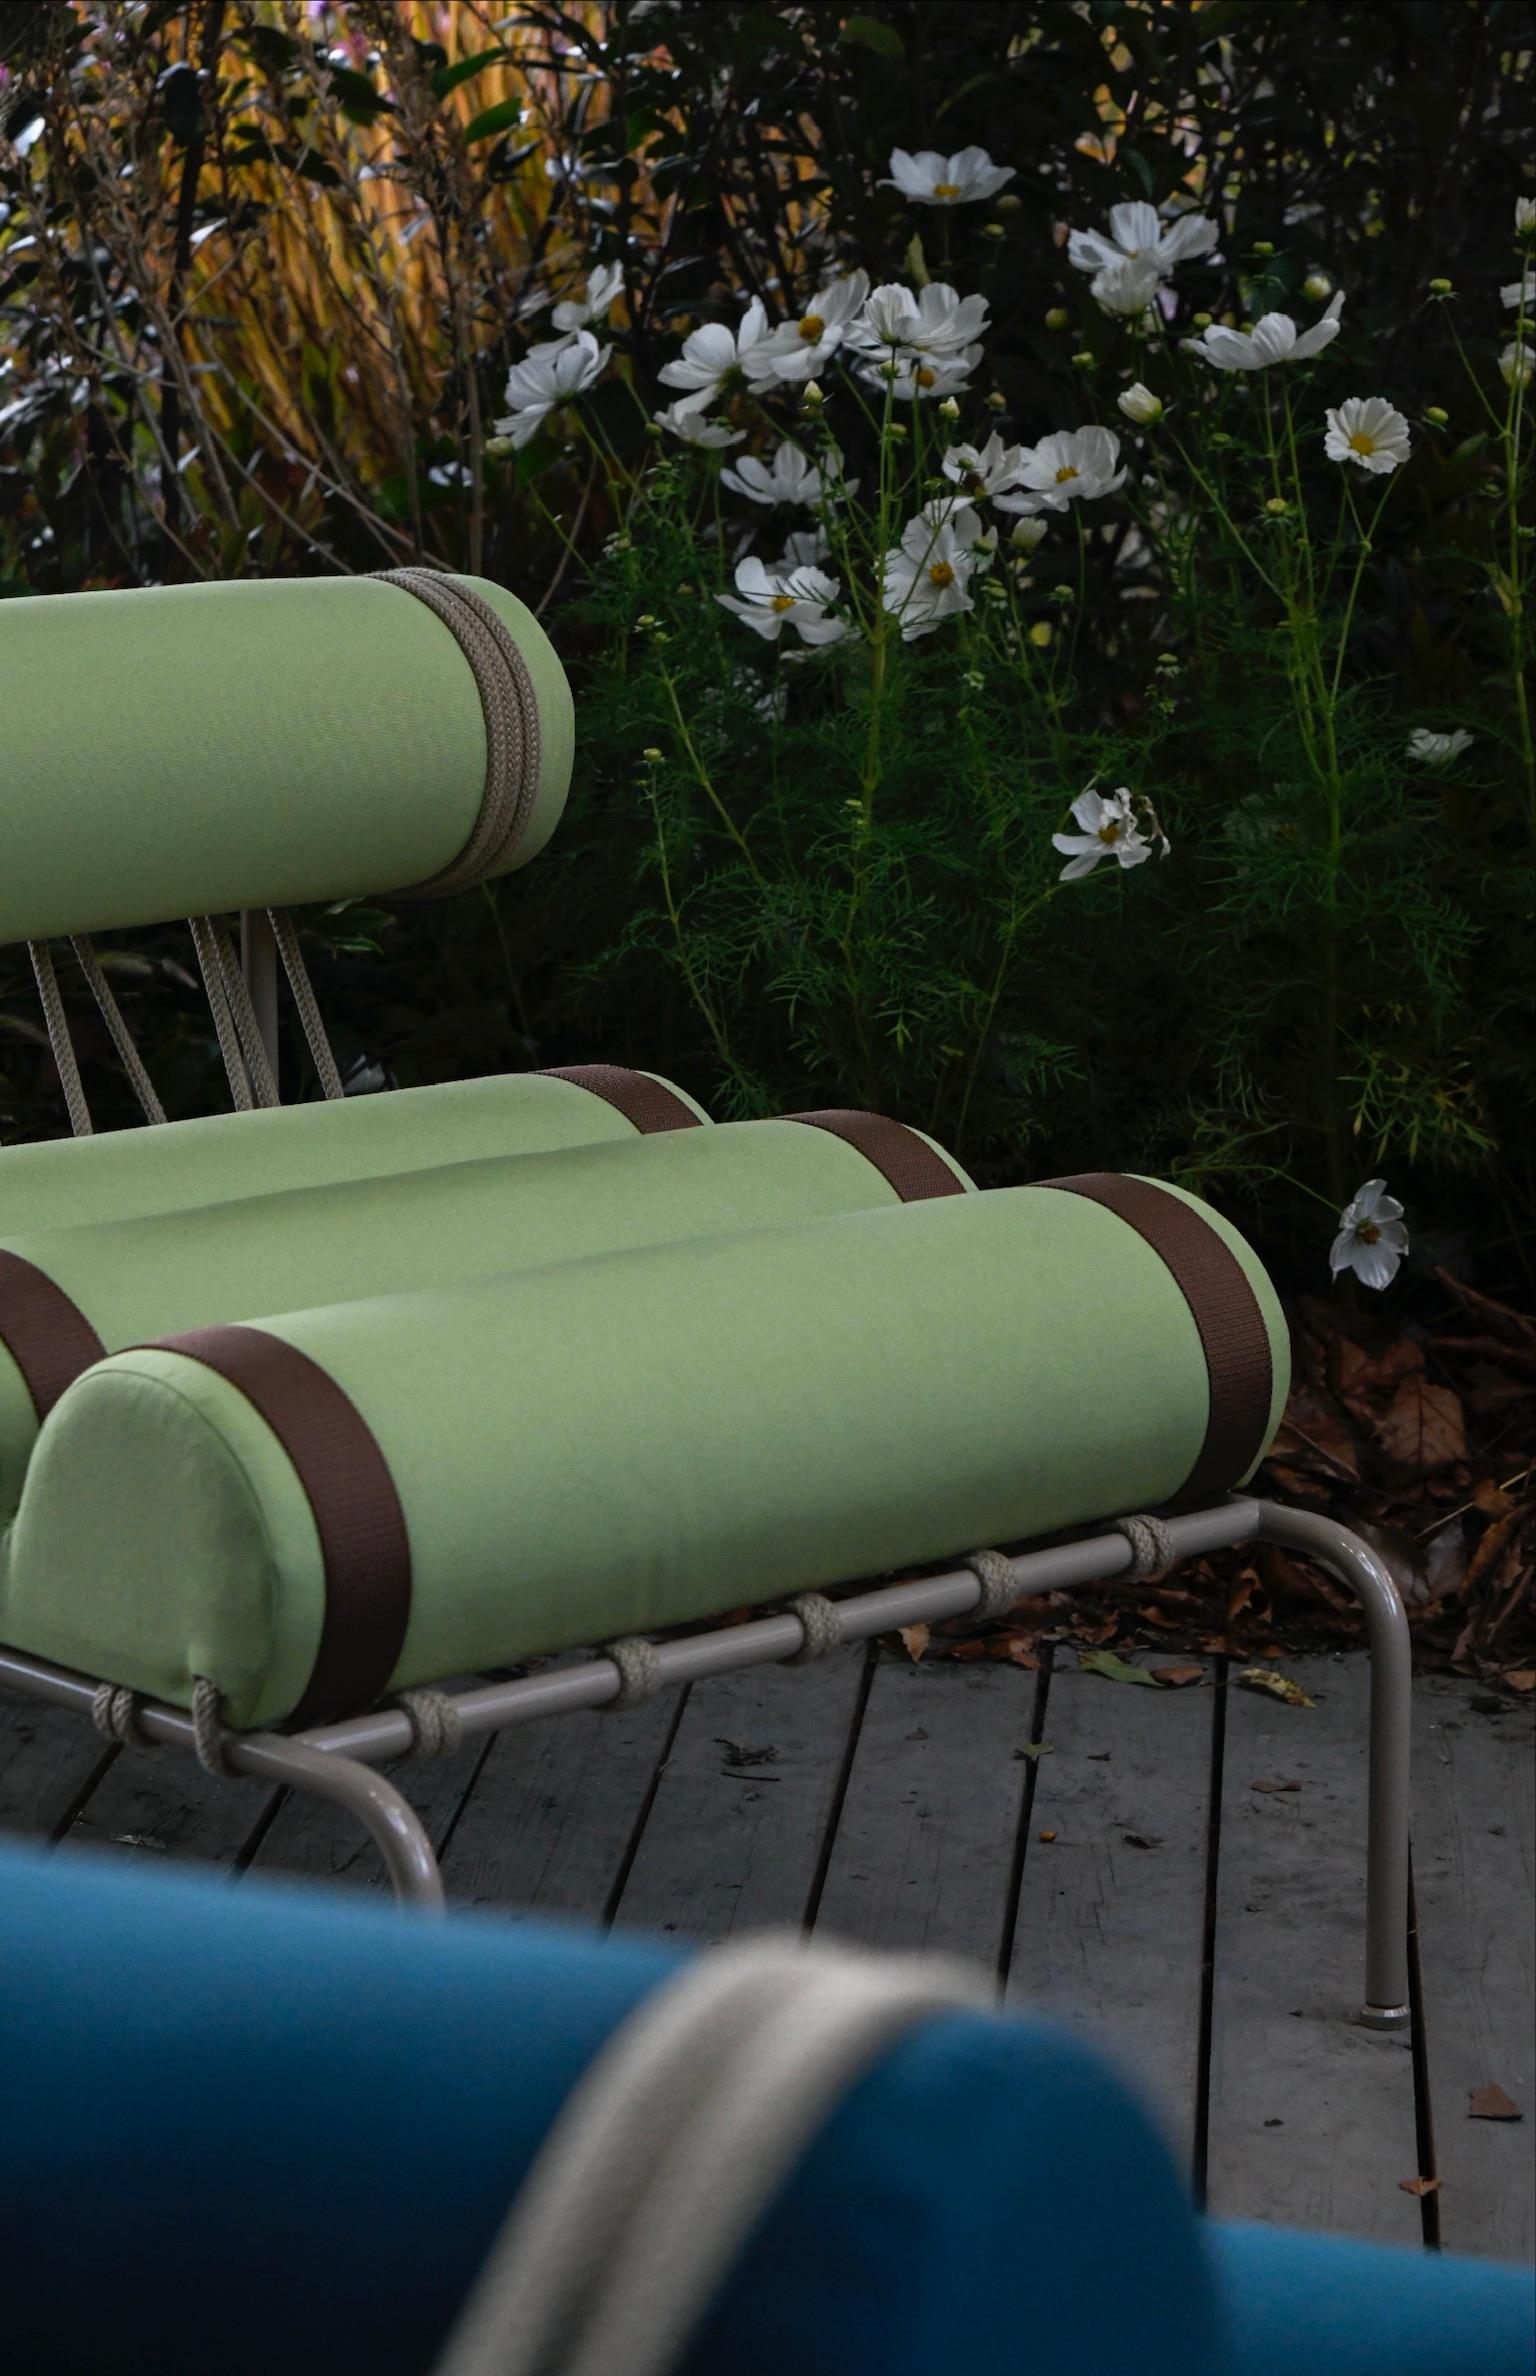 Metal Verde Oasi Plain Kylíndo Outdoor Armchair by Dalmoto For Sale